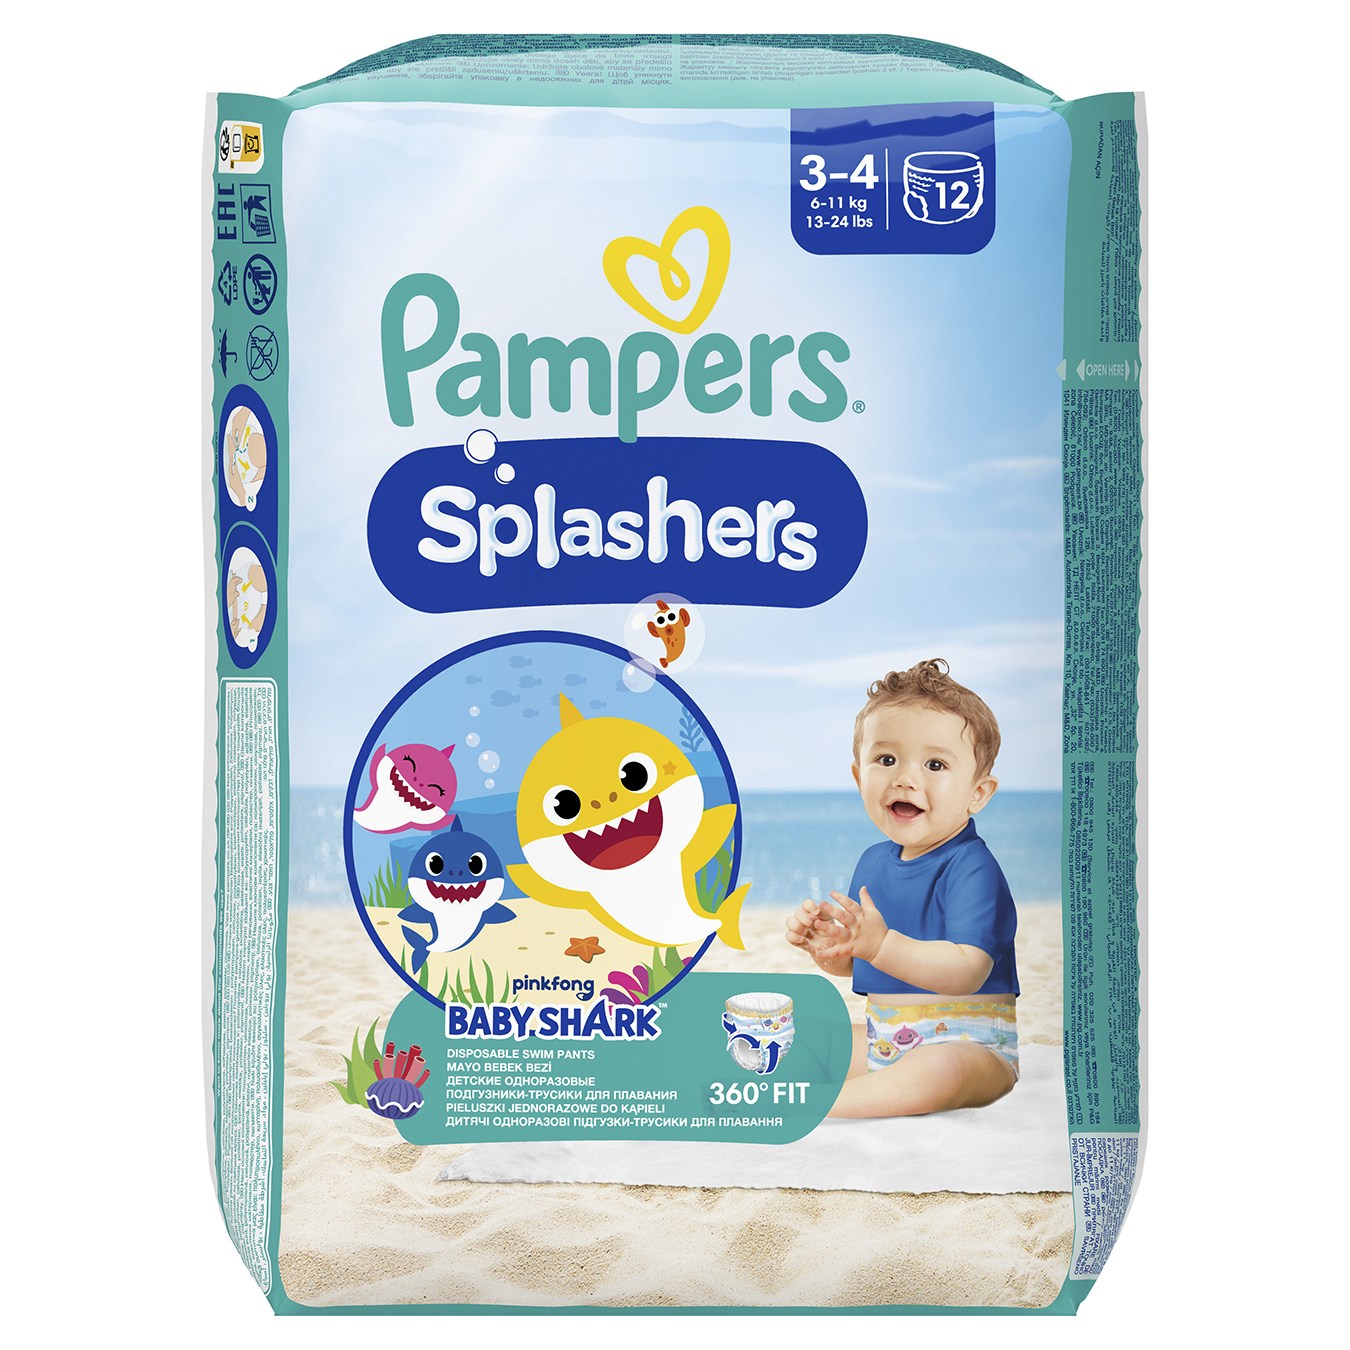 Pampers Splas hers Midi children's disposable swim diapers 6-11 kg